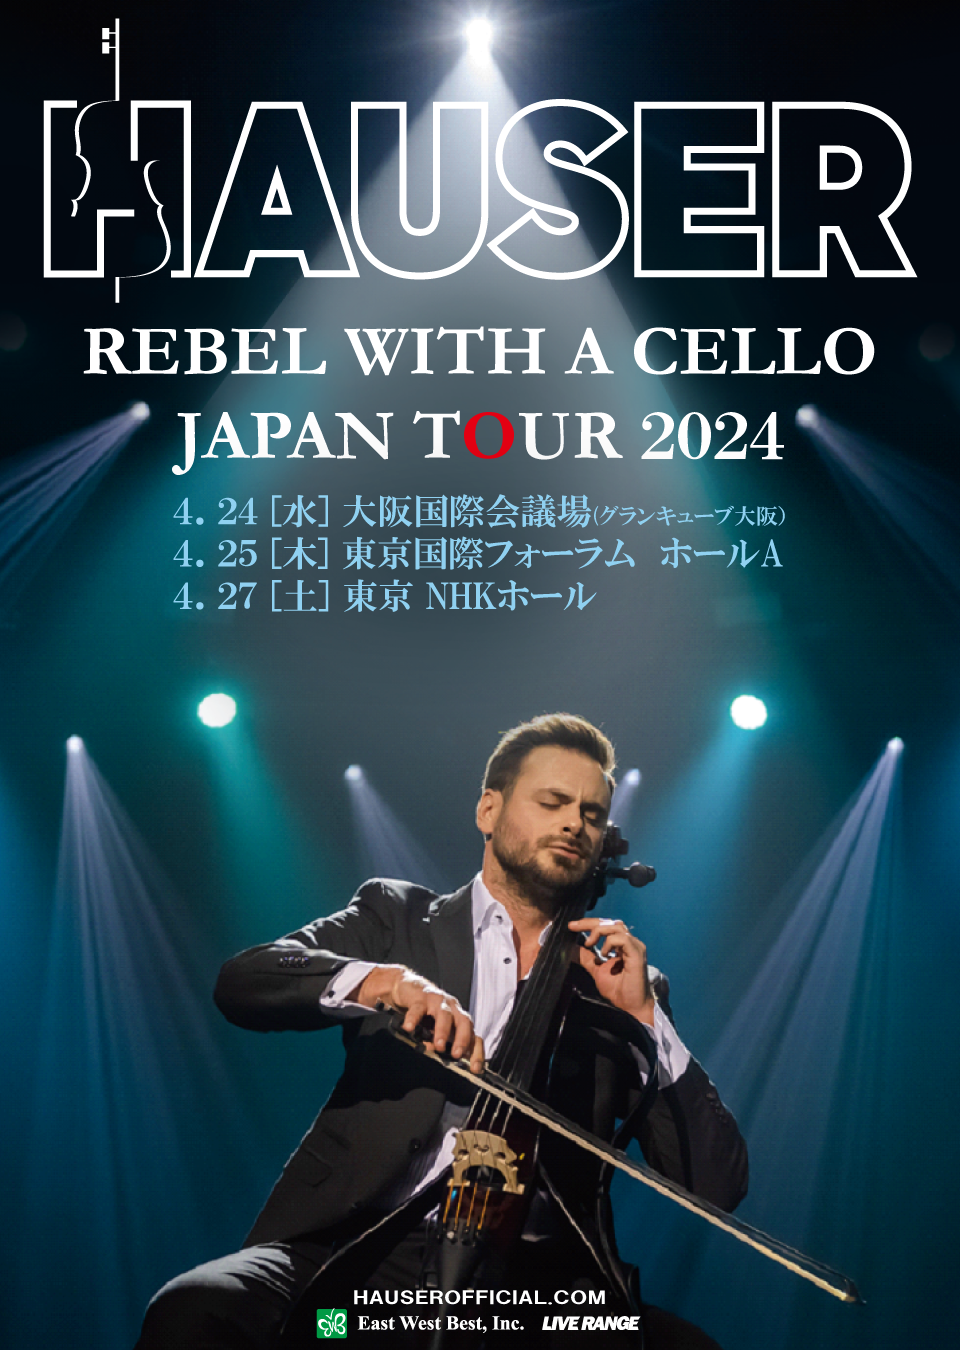 HAUSER REBEL WITH A CELLO JAPAN TOUR 2024